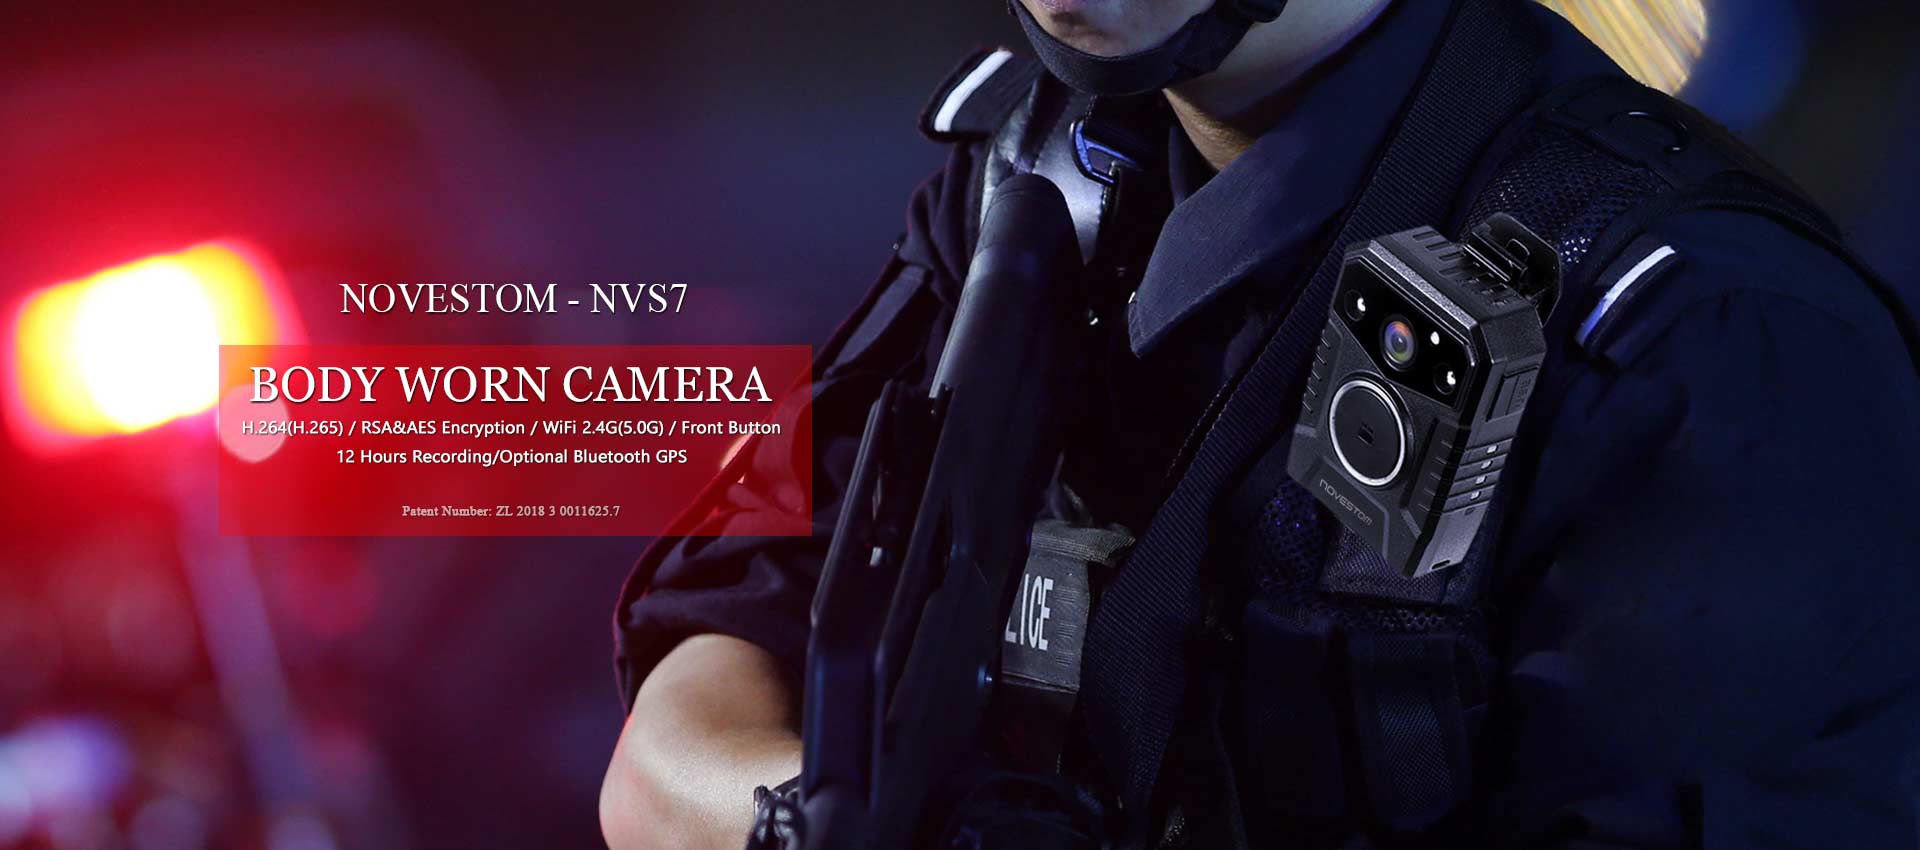 NVS7 wifi પોલીસ સ્ટાઈલ બોડી વિડિયો સુરક્ષા કેમેરા GPS AES સાથે પહેરવામાં આવે છે